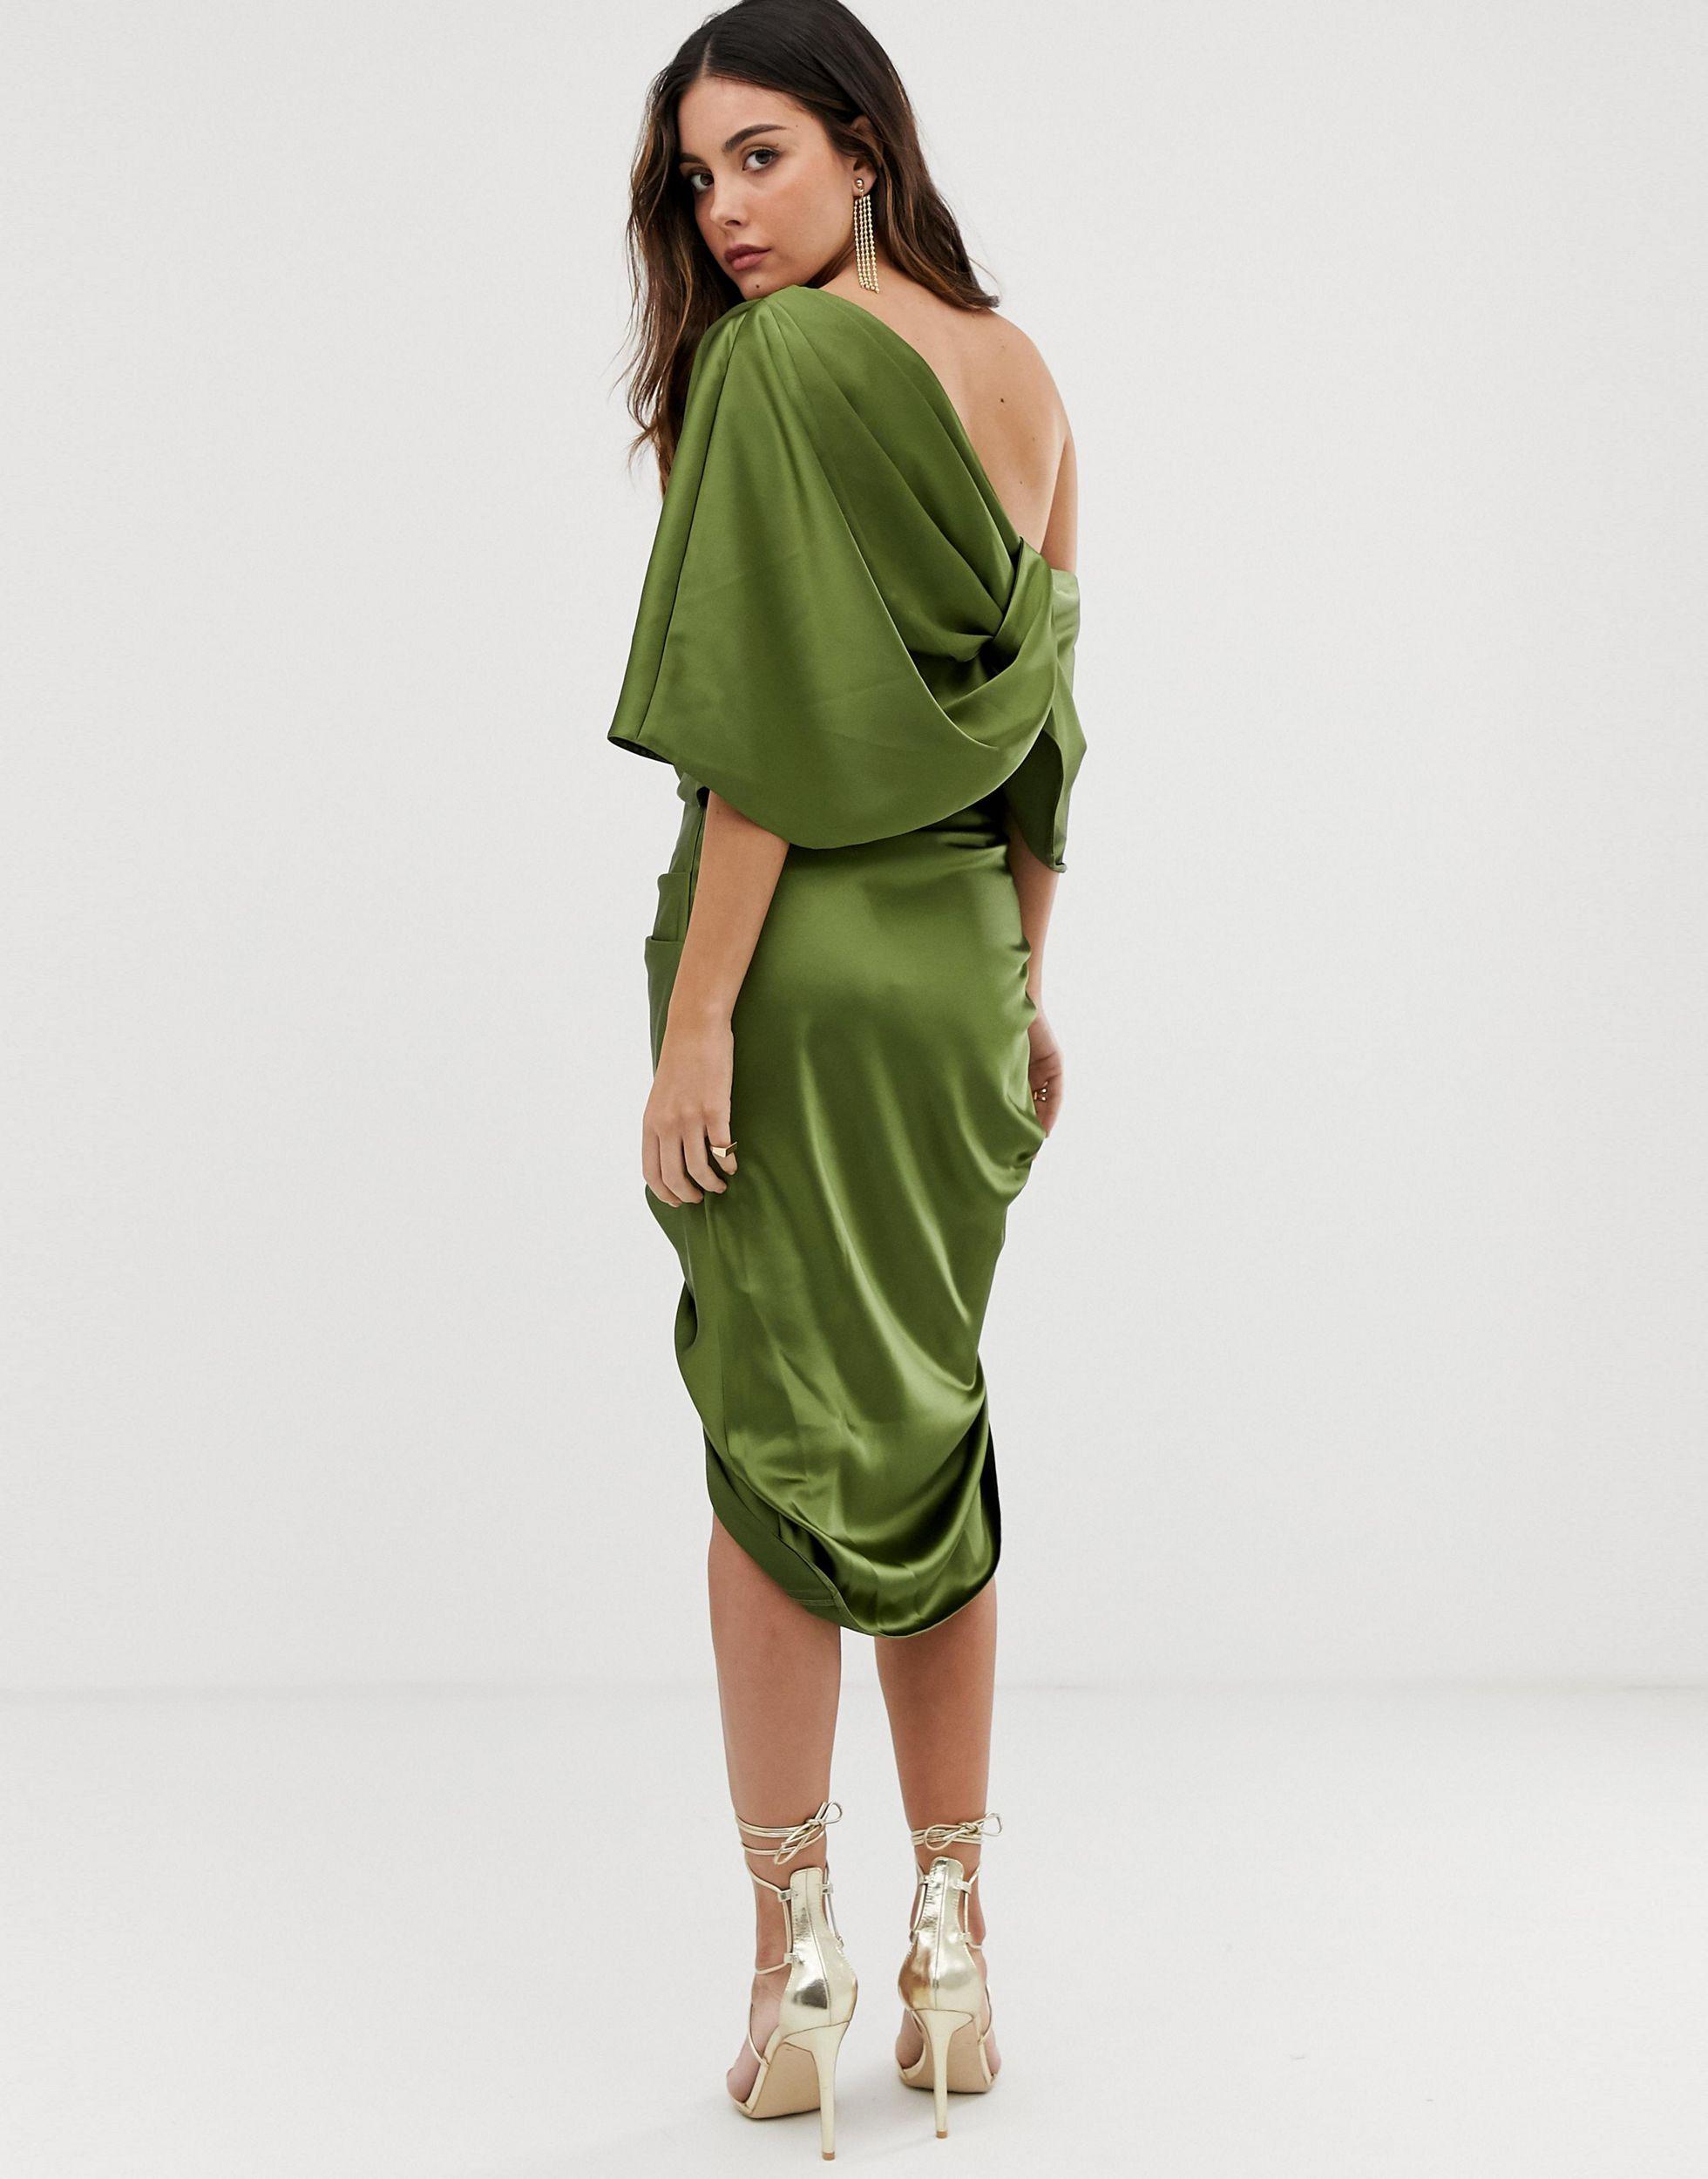 ASOS Satin Drape Asymmetric Midi Dress in Green - Lyst